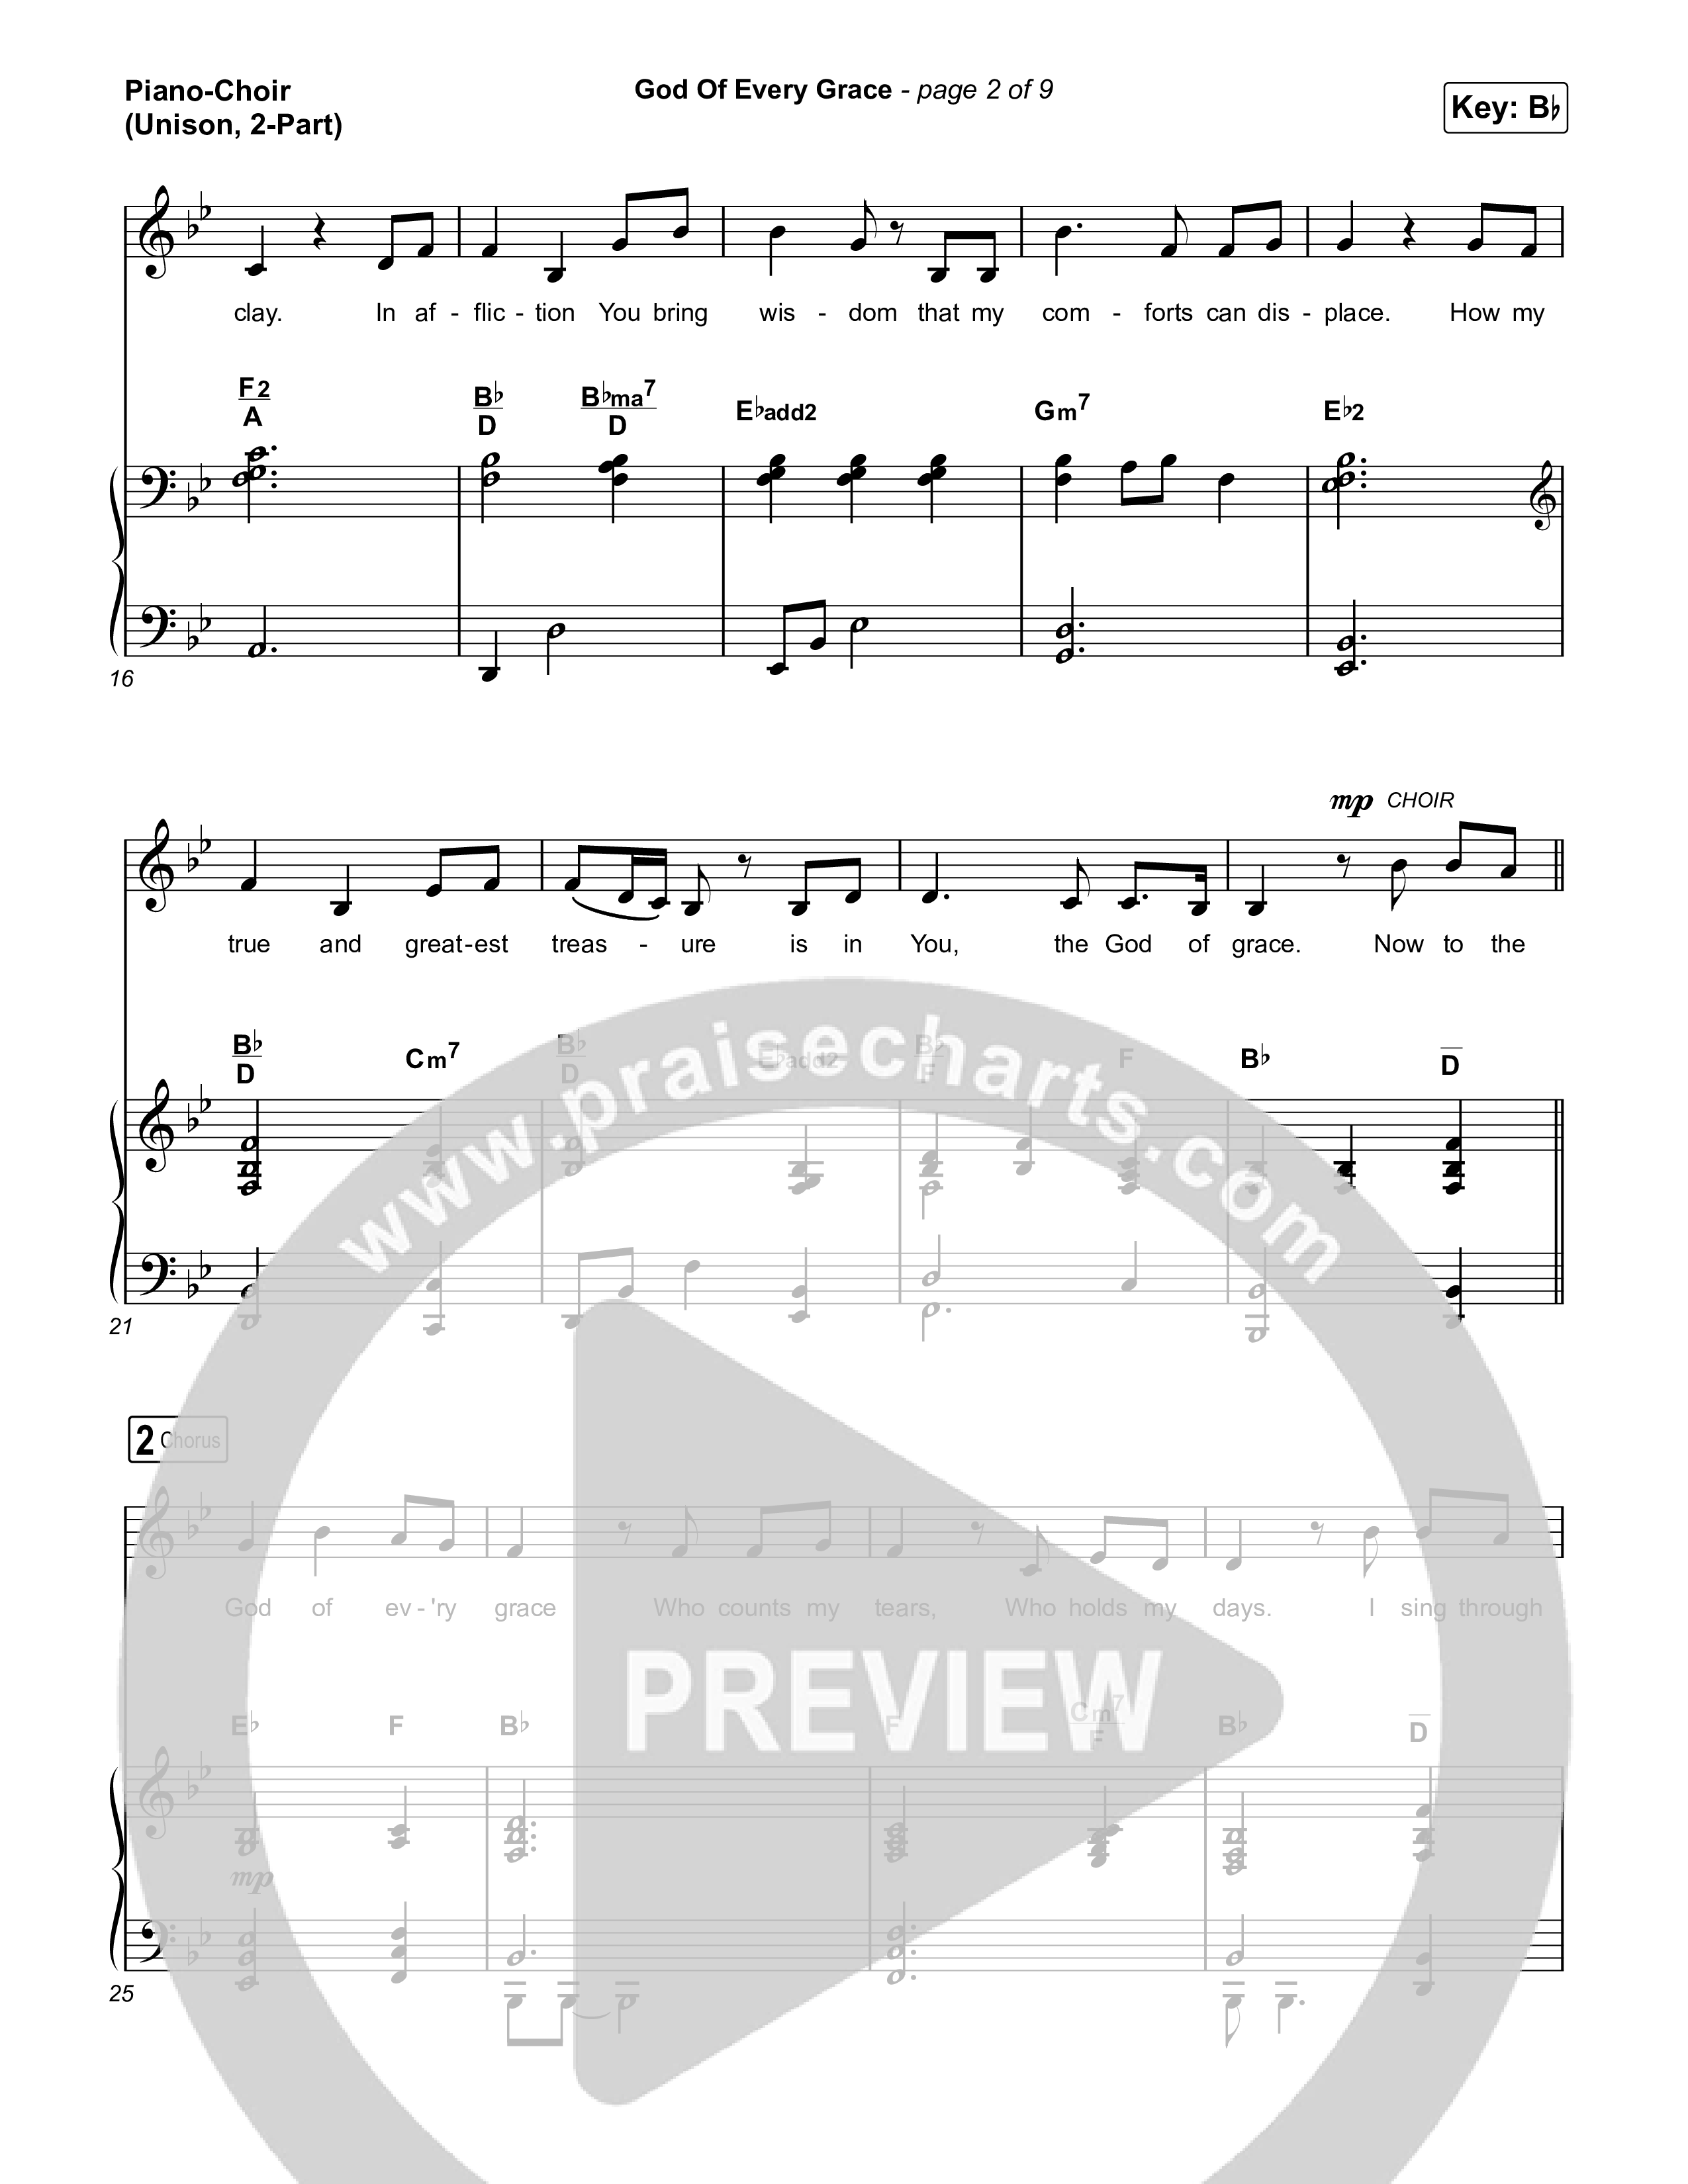 God Of Every Grace (Unison/2-Part) Piano/Choir  (Uni/2-Part) (Keith & Kristyn Getty / Matt Boswell / Matt Papa / Arr. Mason Brown)